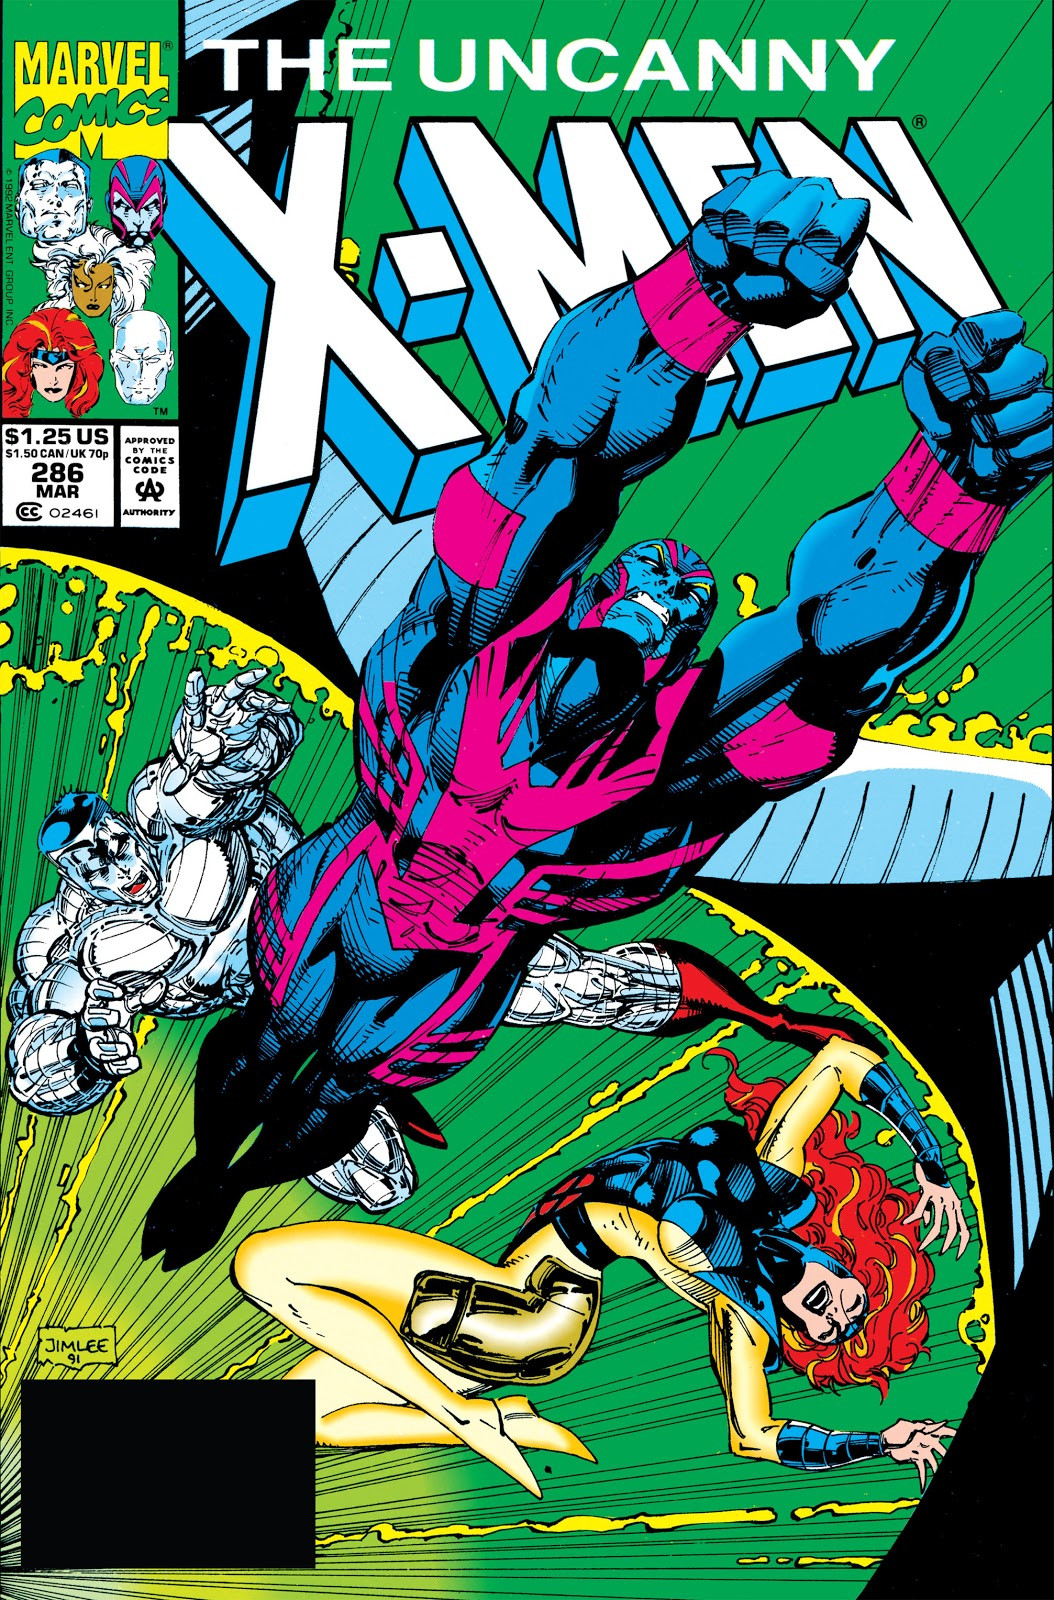 Uncanny X-Men Vol 1 286 | Marvel Database | Fandom